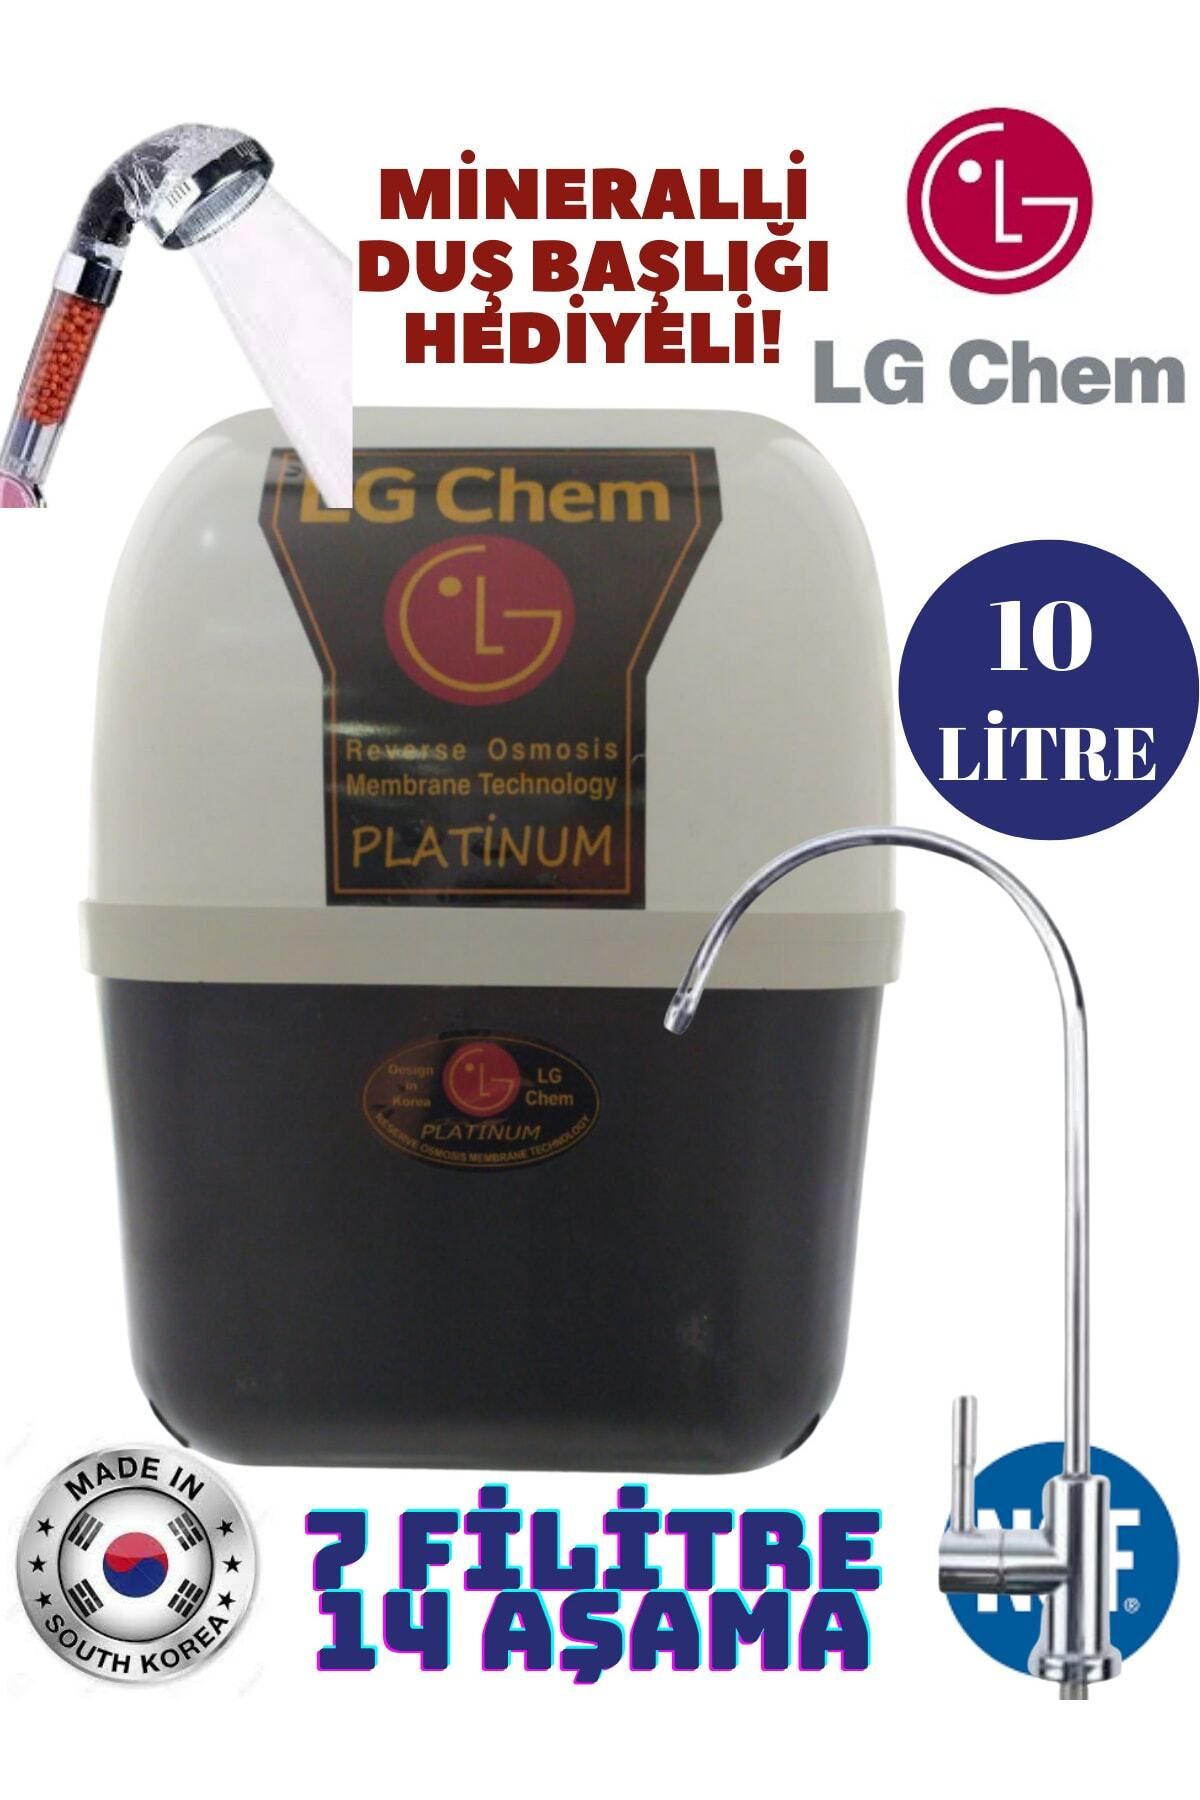 LG Chem Platınum 10 Litrelik 7 Filitre 14 Aşamalı Su Arıtma Cihazı Duş Başlığı Hediyeli